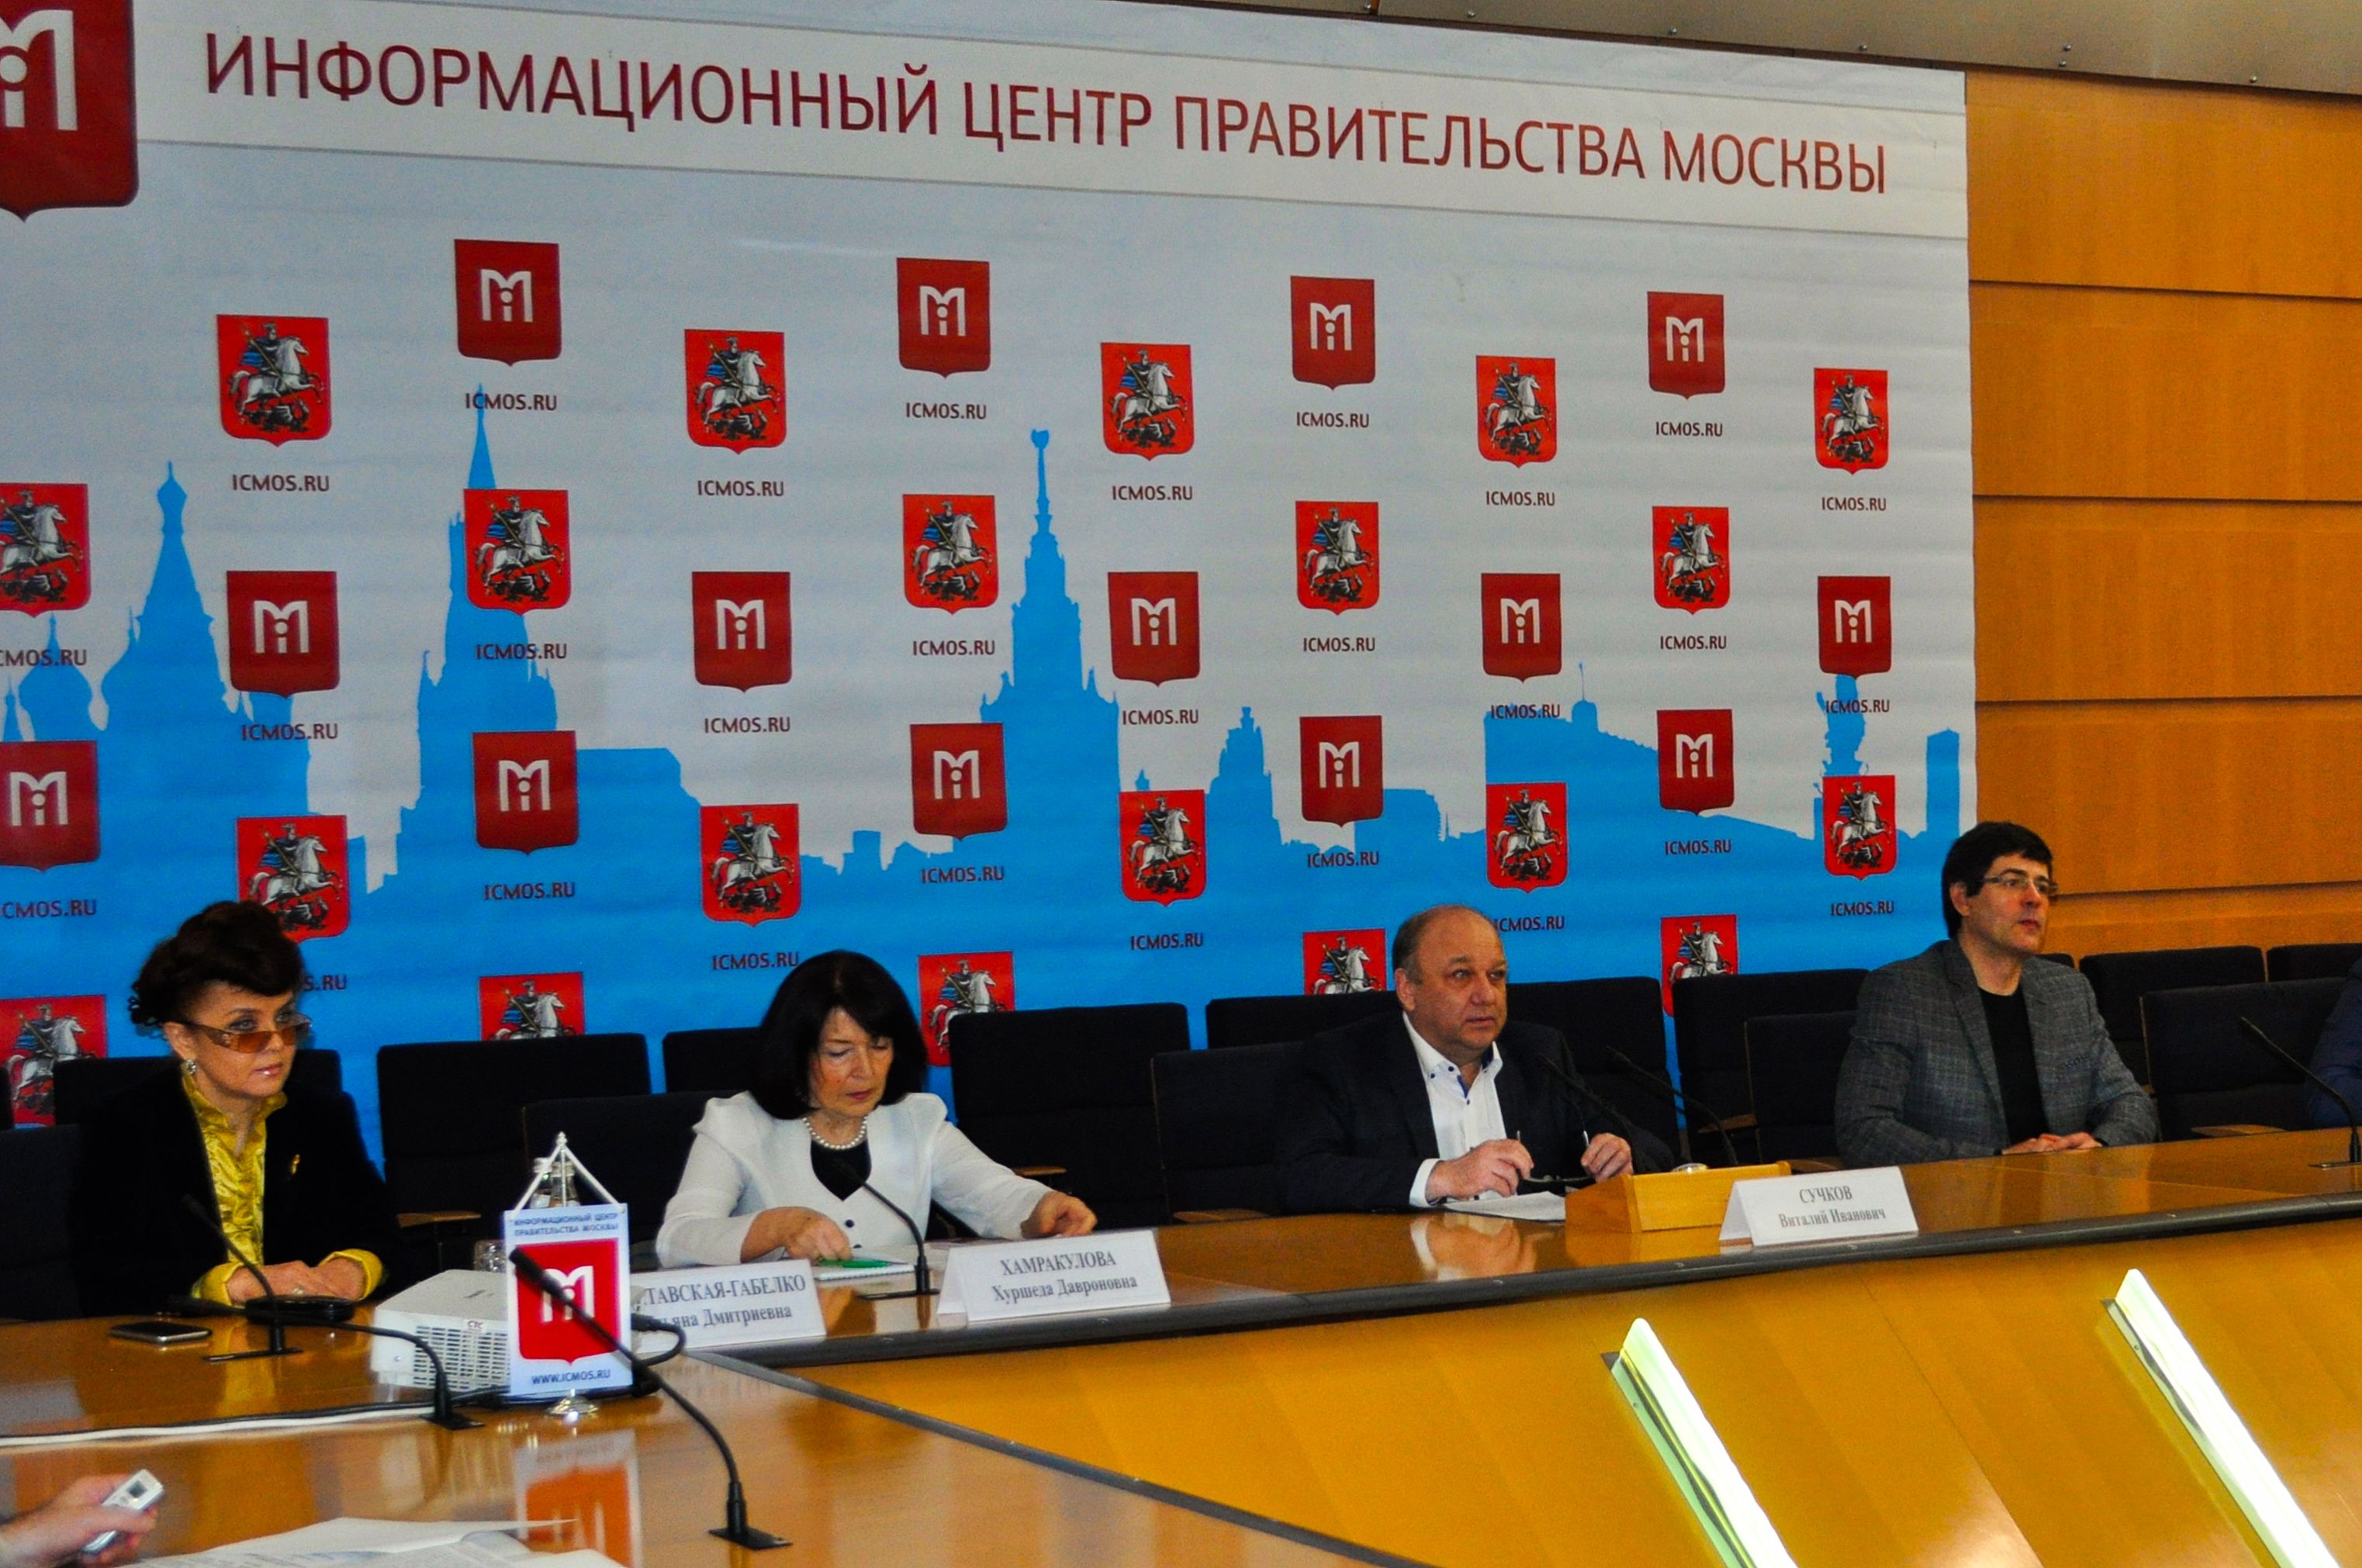 Празднование Навруза обсудили на пресс-конференции в Москве